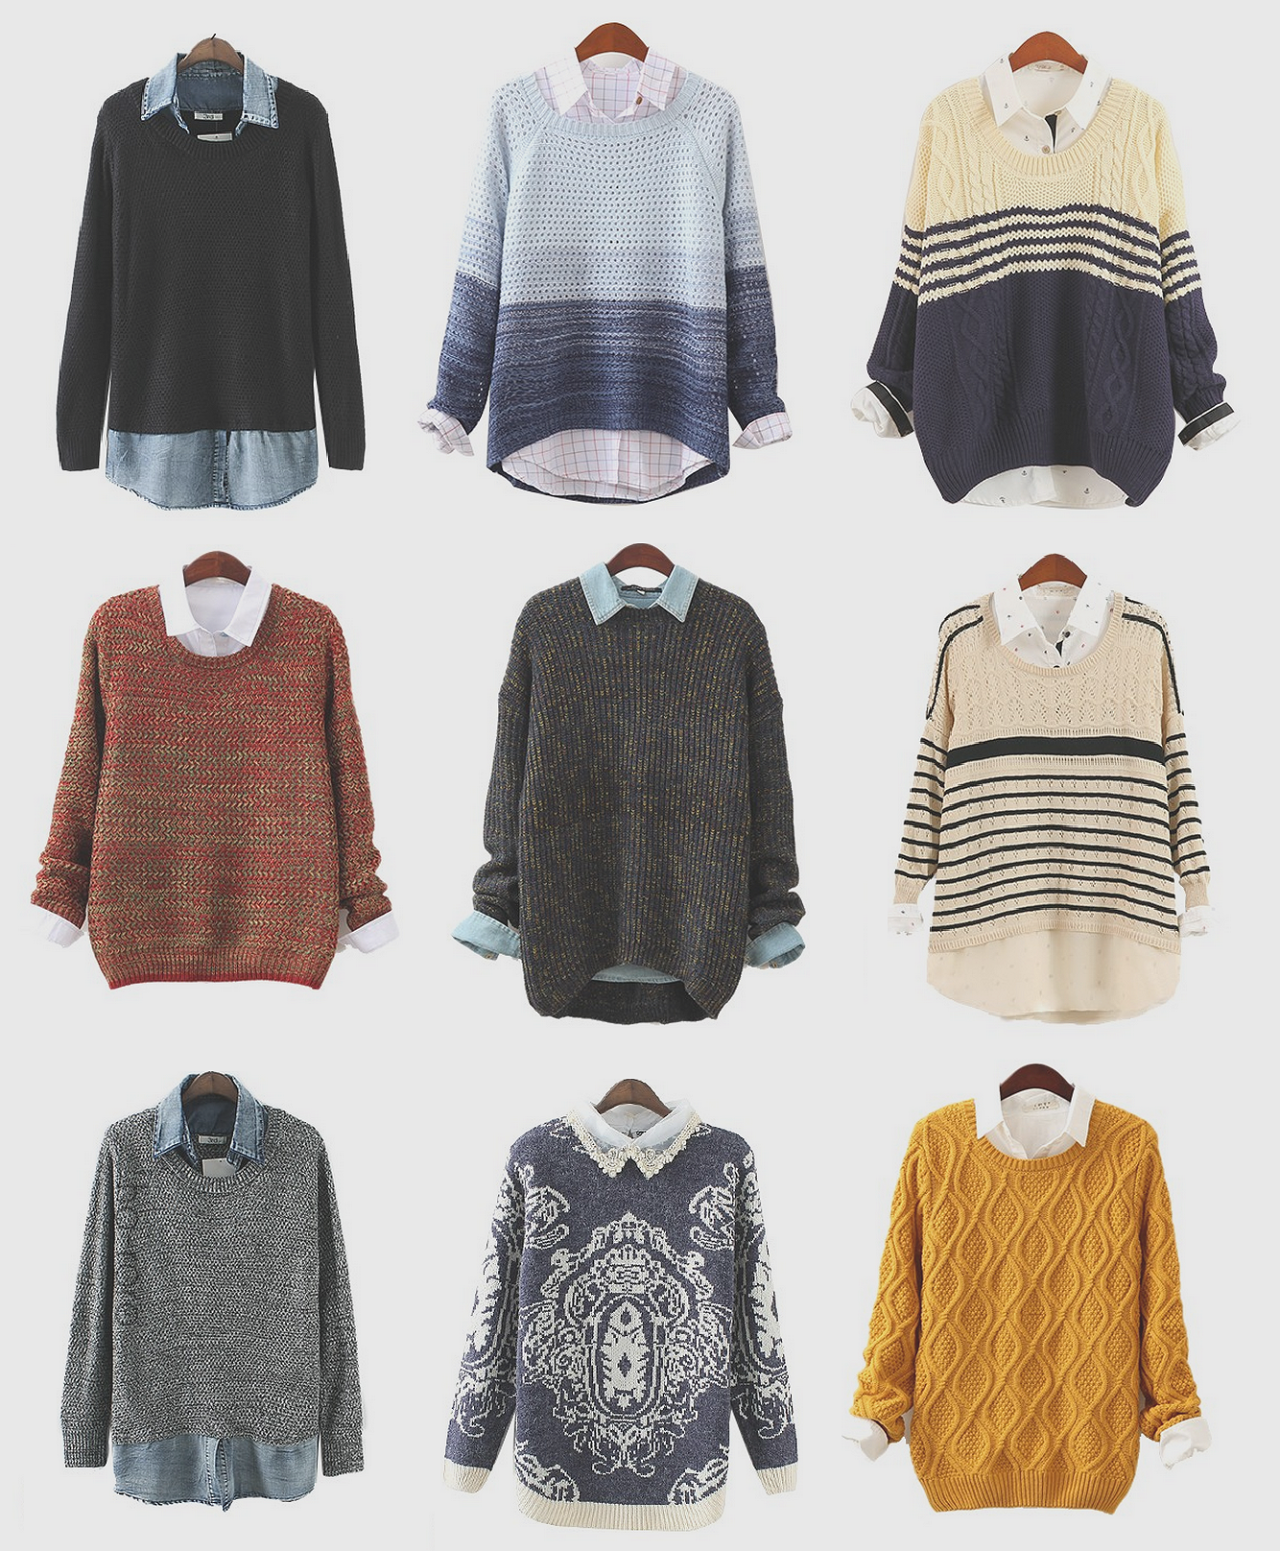  sweater   shirt | ❄ ❄ ❄ ❄ ❄ ❄ ❄ ❄ ❄ | $5 off code: yoyo5off